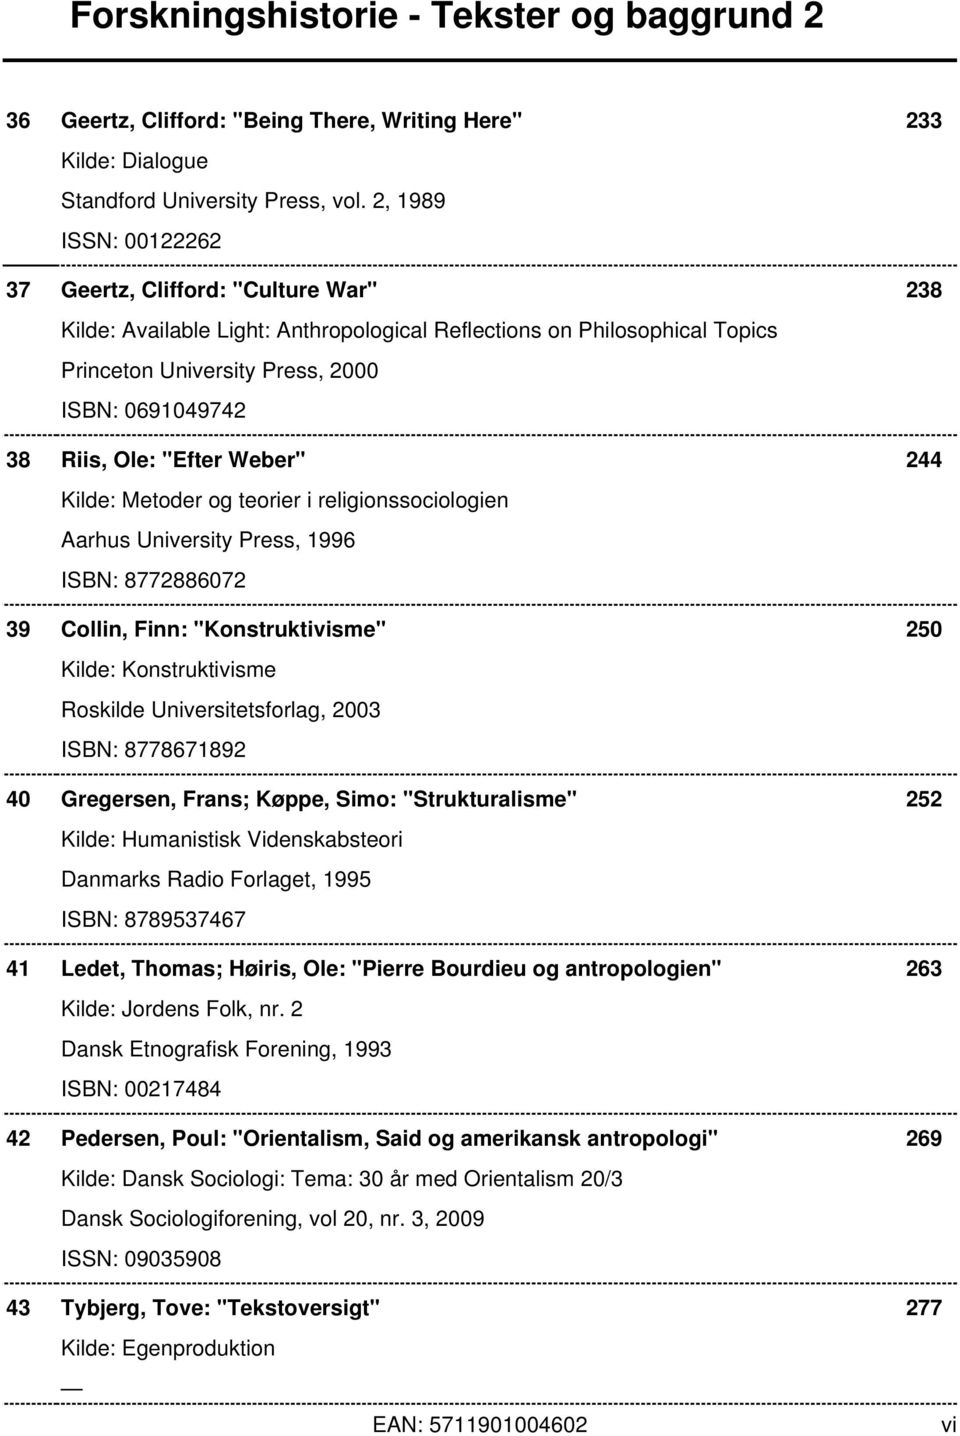 Ole: "Efter Weber" 244 Kilde: Metoder og teorier i religionssociologien Aarhus University Press, 1996 ISBN: 8772886072 39 Collin, Finn: "Konstruktivisme" 250 Kilde: Konstruktivisme Roskilde